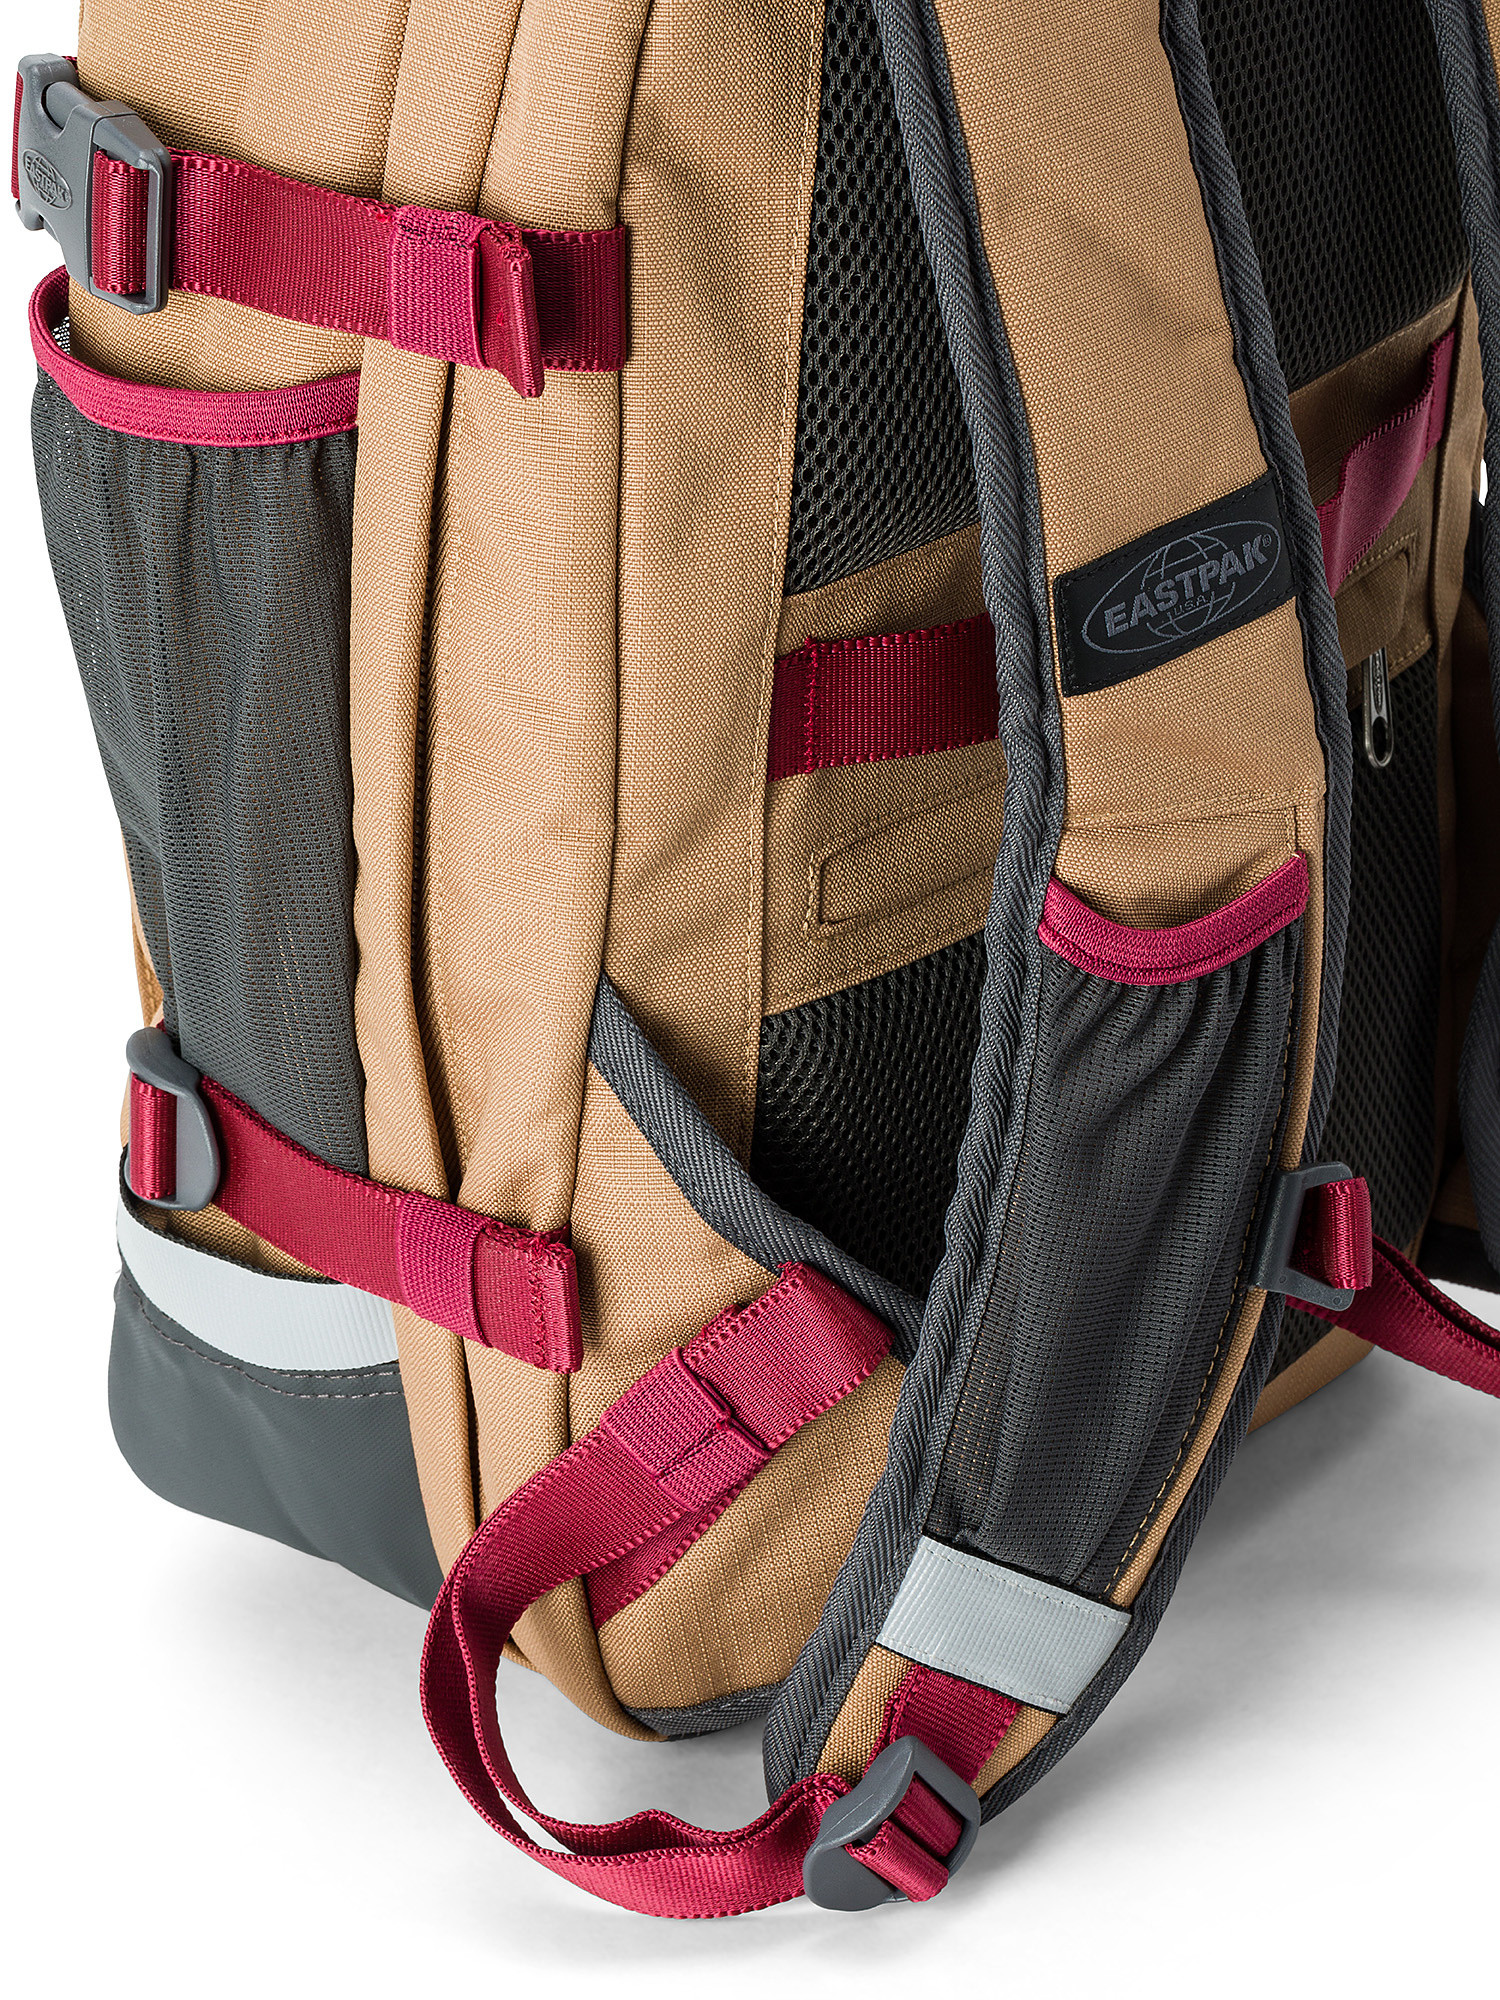 Eastpak - Out Safepack Out Brown backpack, Light Brown, large image number 2